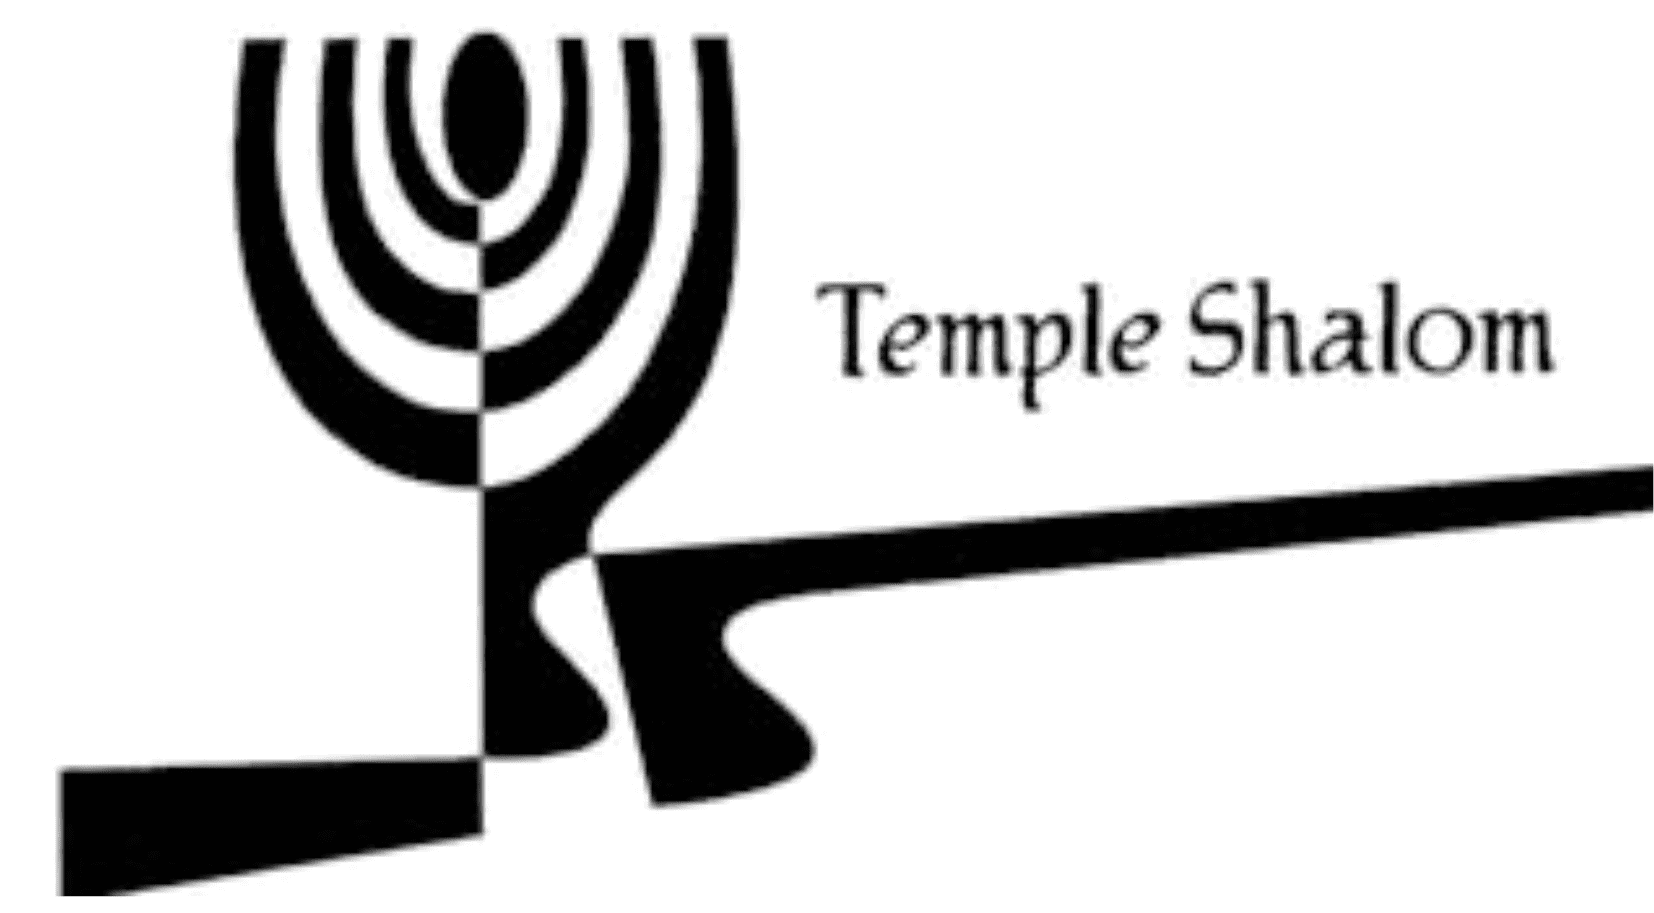 Temple Shalom Reform Congregation